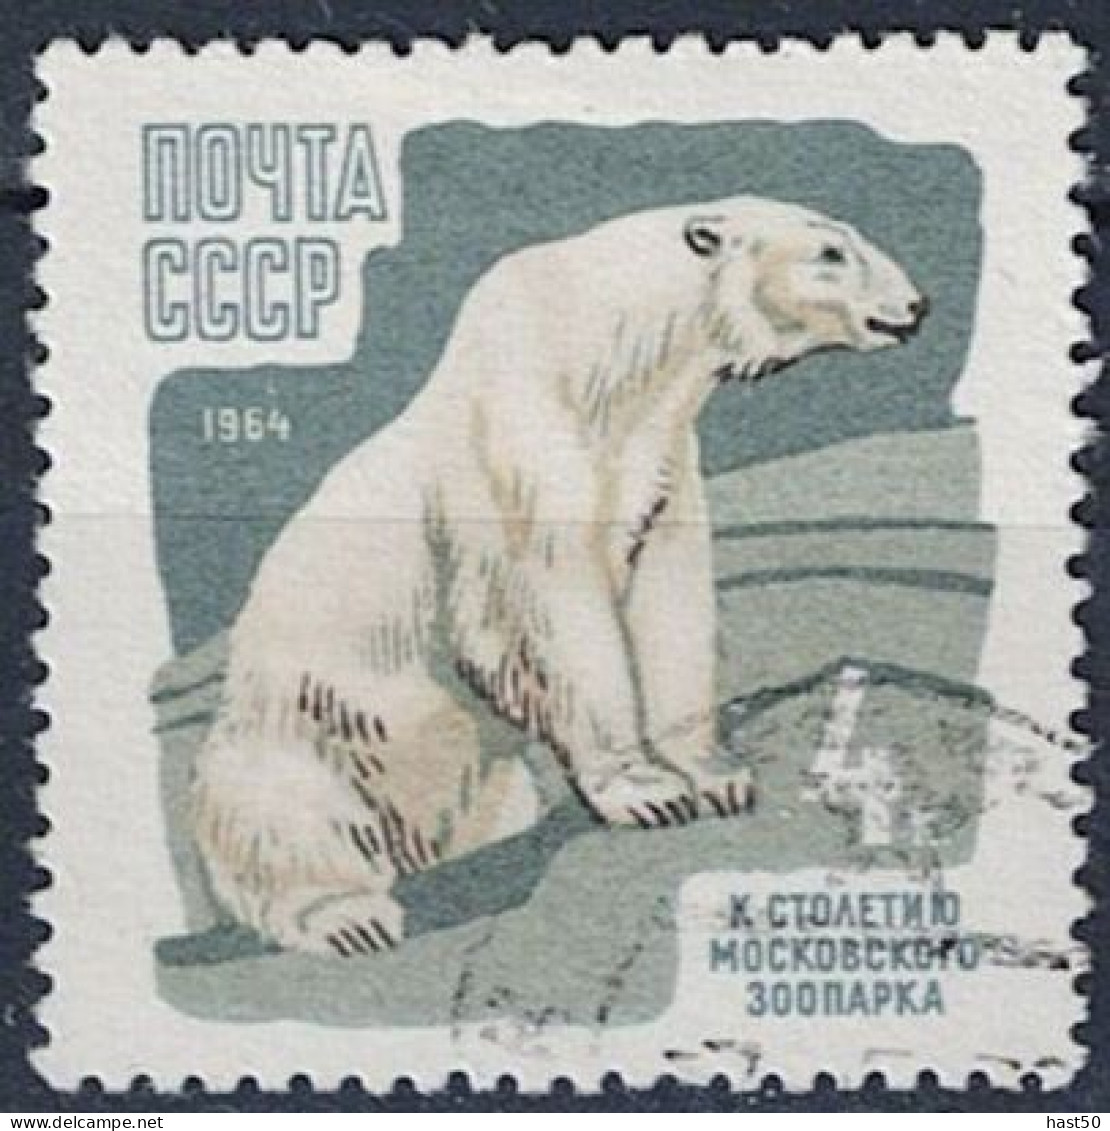 Sowjetunion UdSSR - Eisbär (Ursus Maritimus) (MiNr. 2916) 1964 - Gest Used Obl - Gebruikt